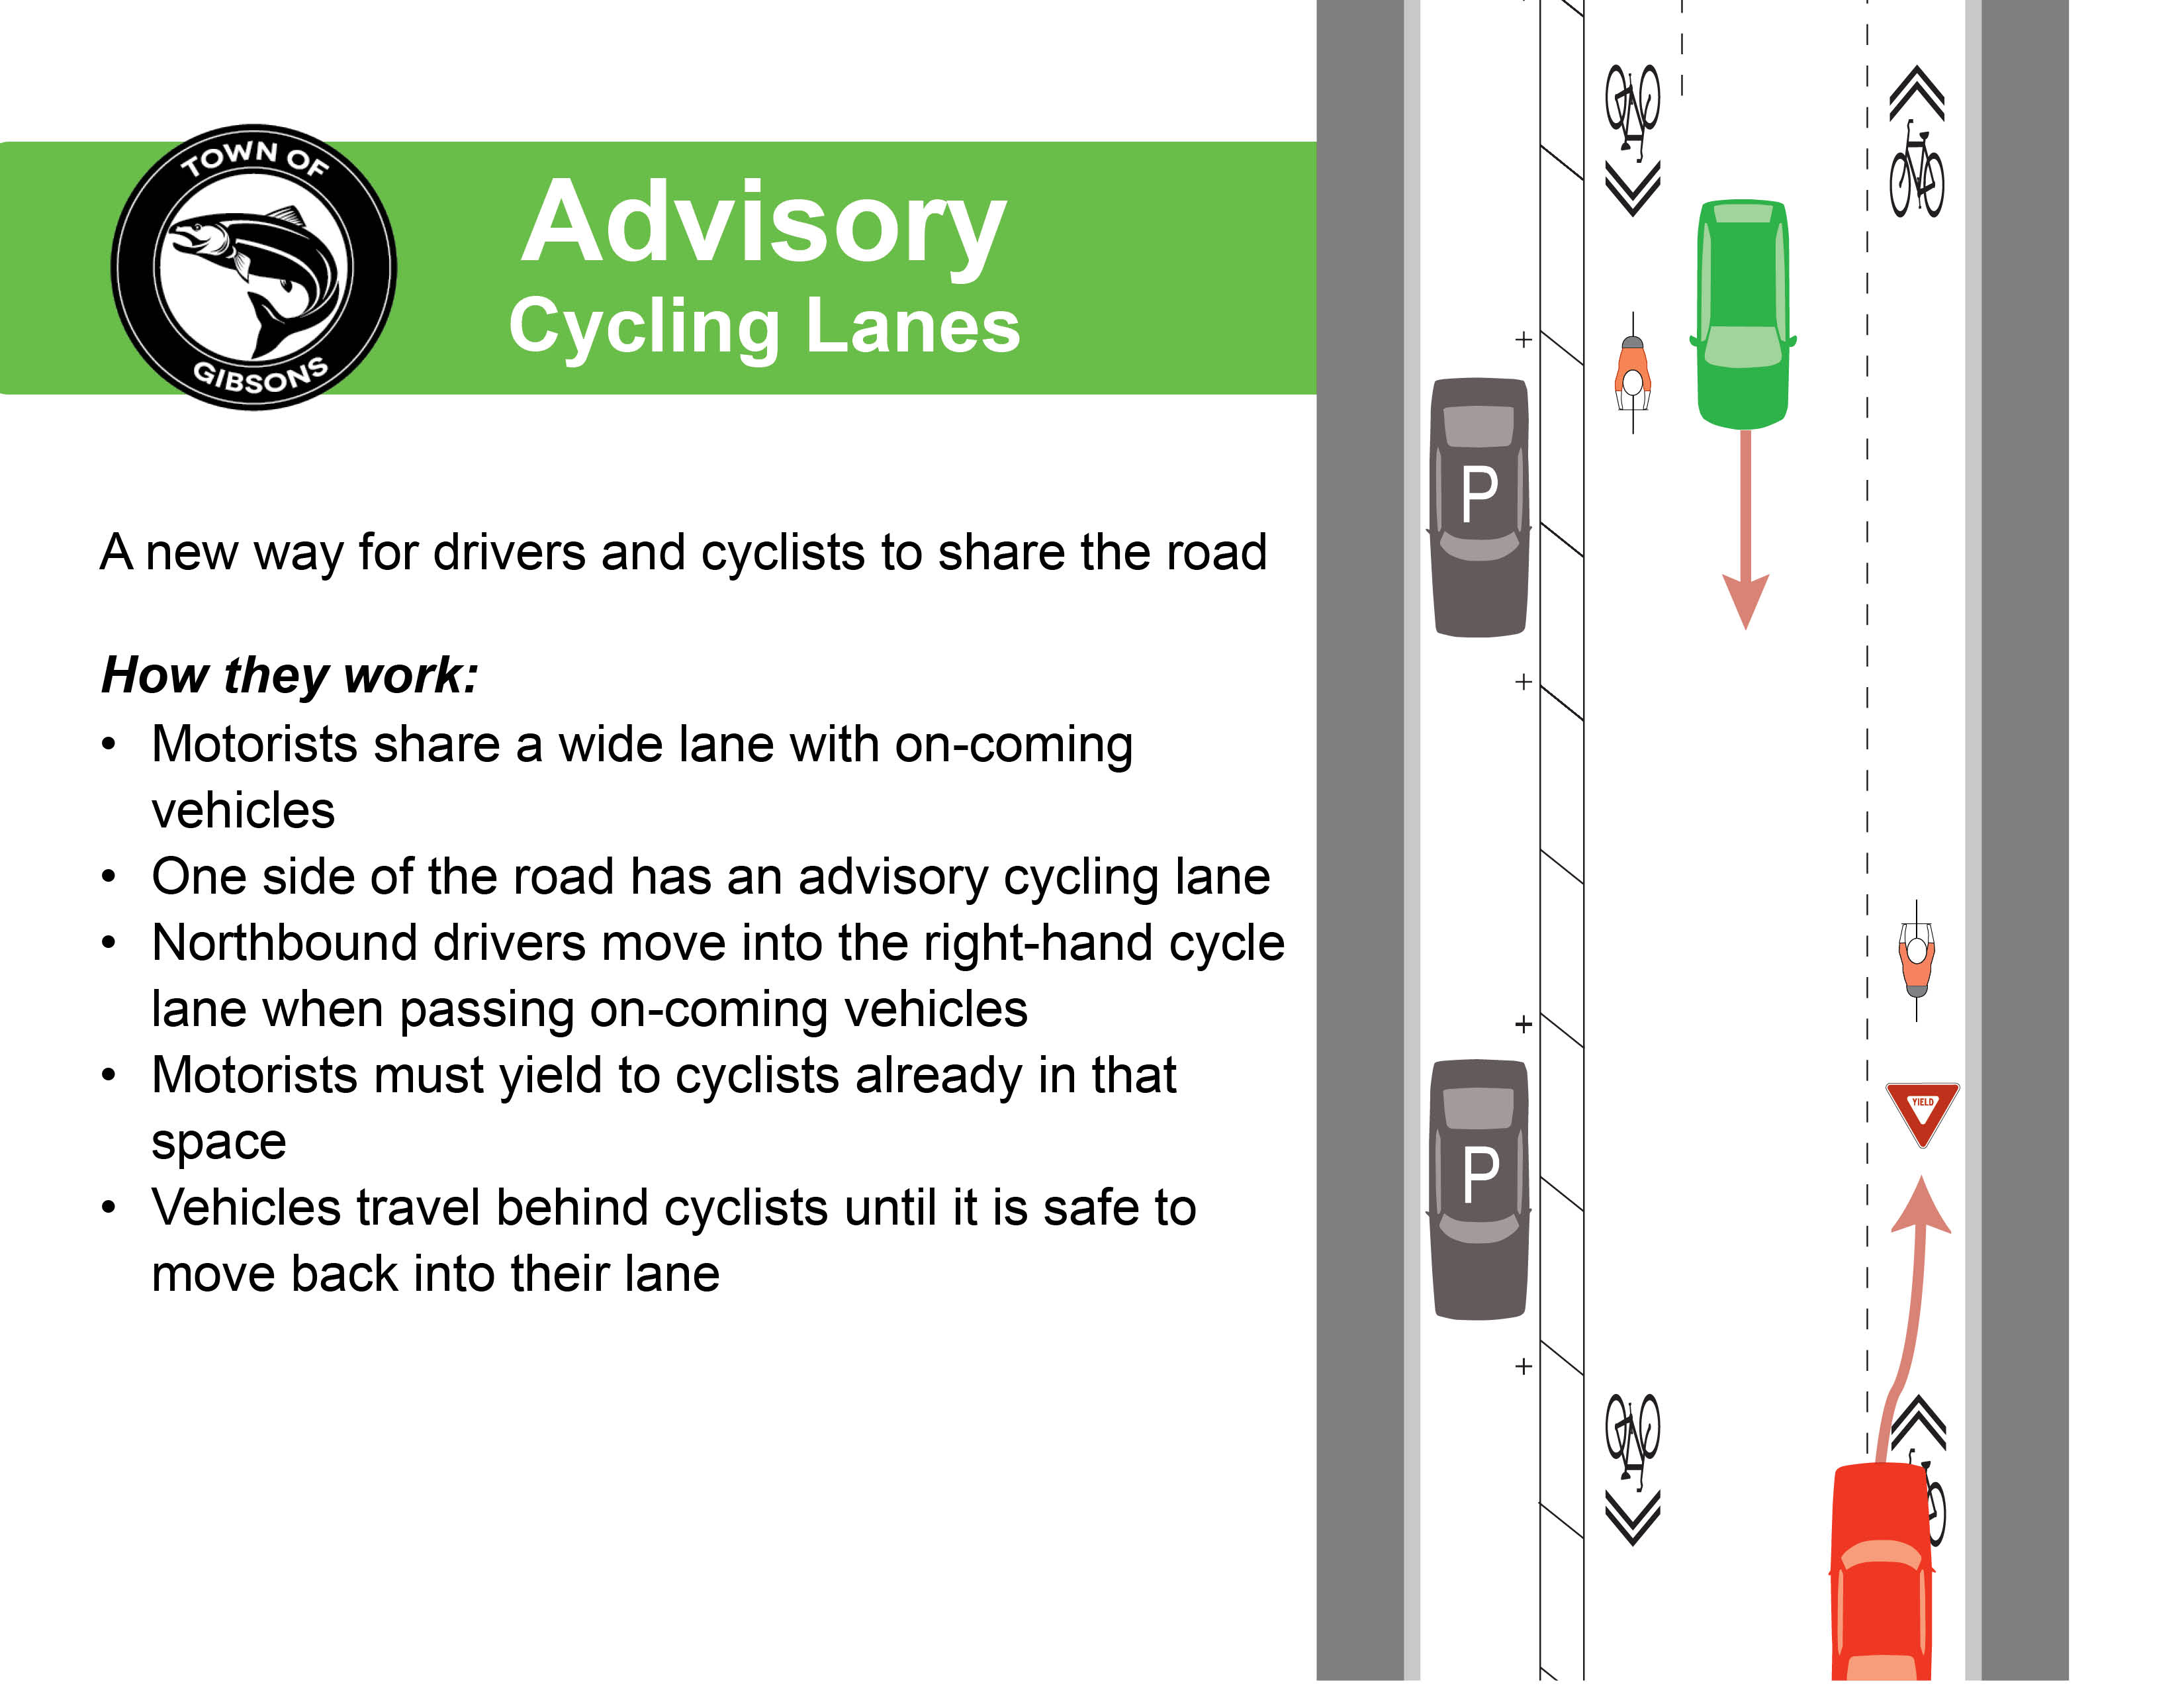  Advisory Bike Lanes in Gibsons